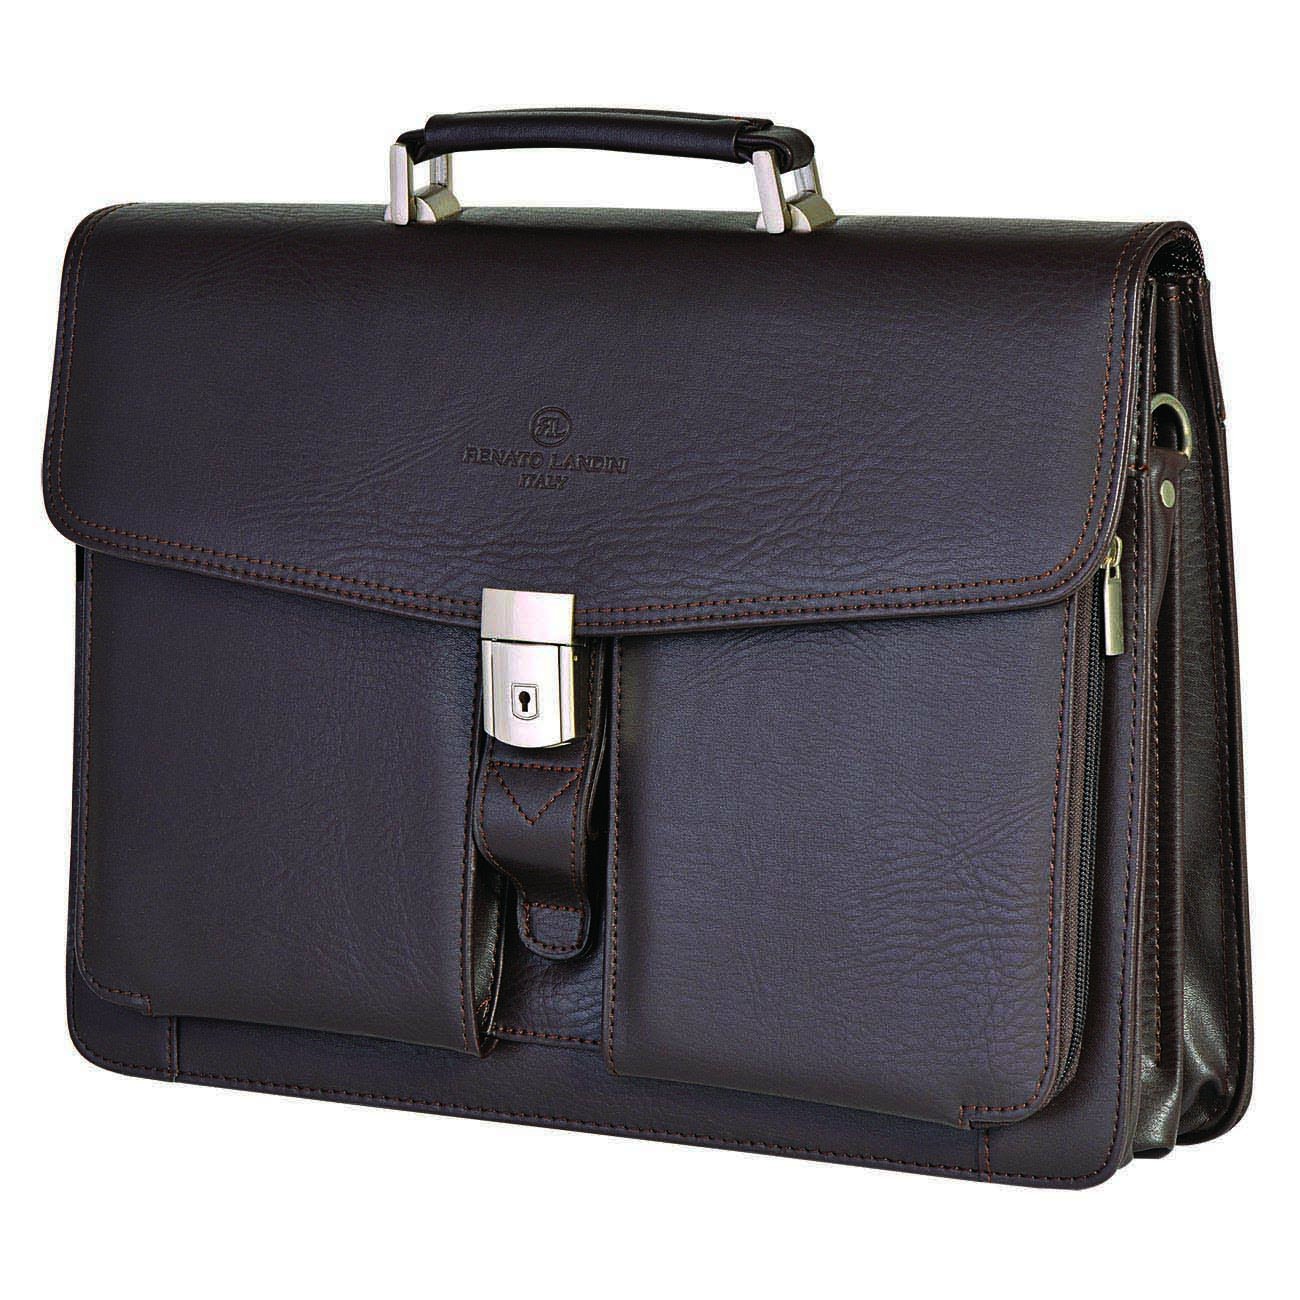 RENATO LANDINI Gift Set: Brown Leather Bag + Pen + Men's Wallet + Cufflink + Key Holder